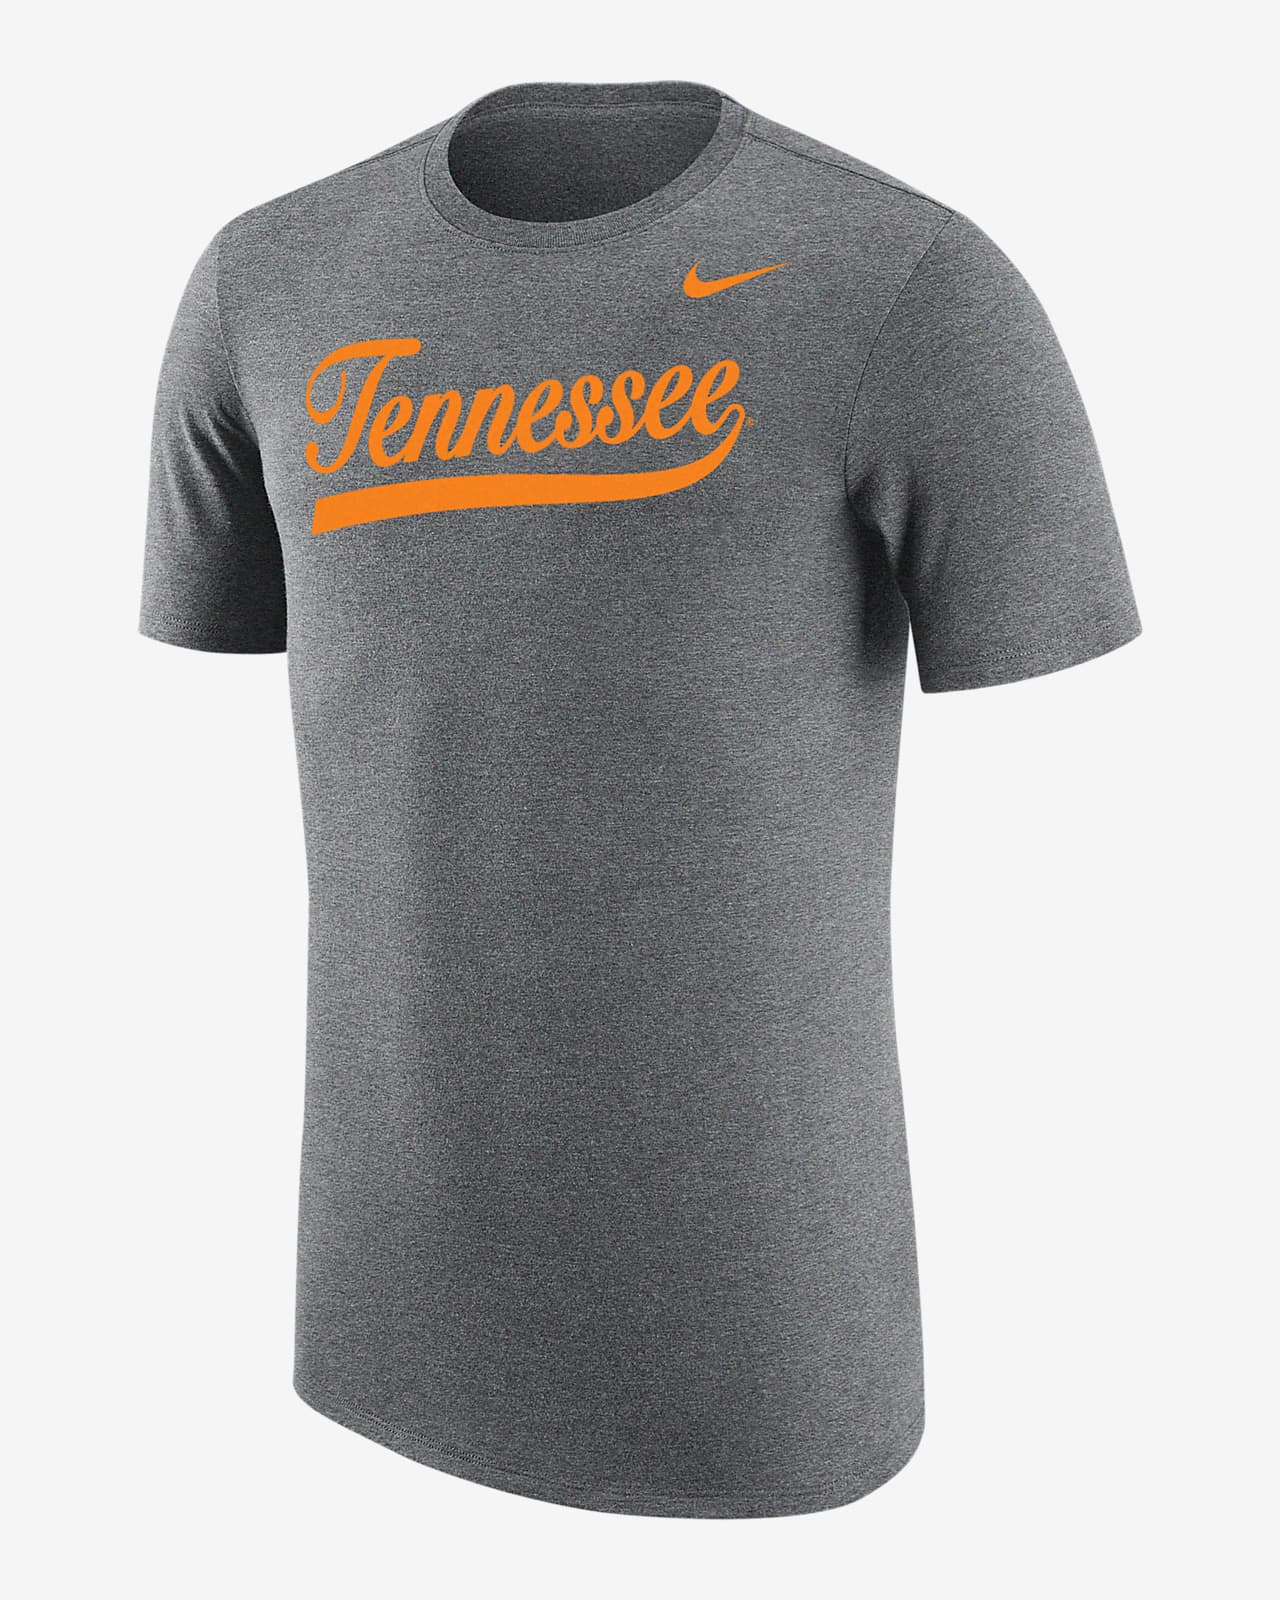 Playera universitaria Nike para hombre Tennessee